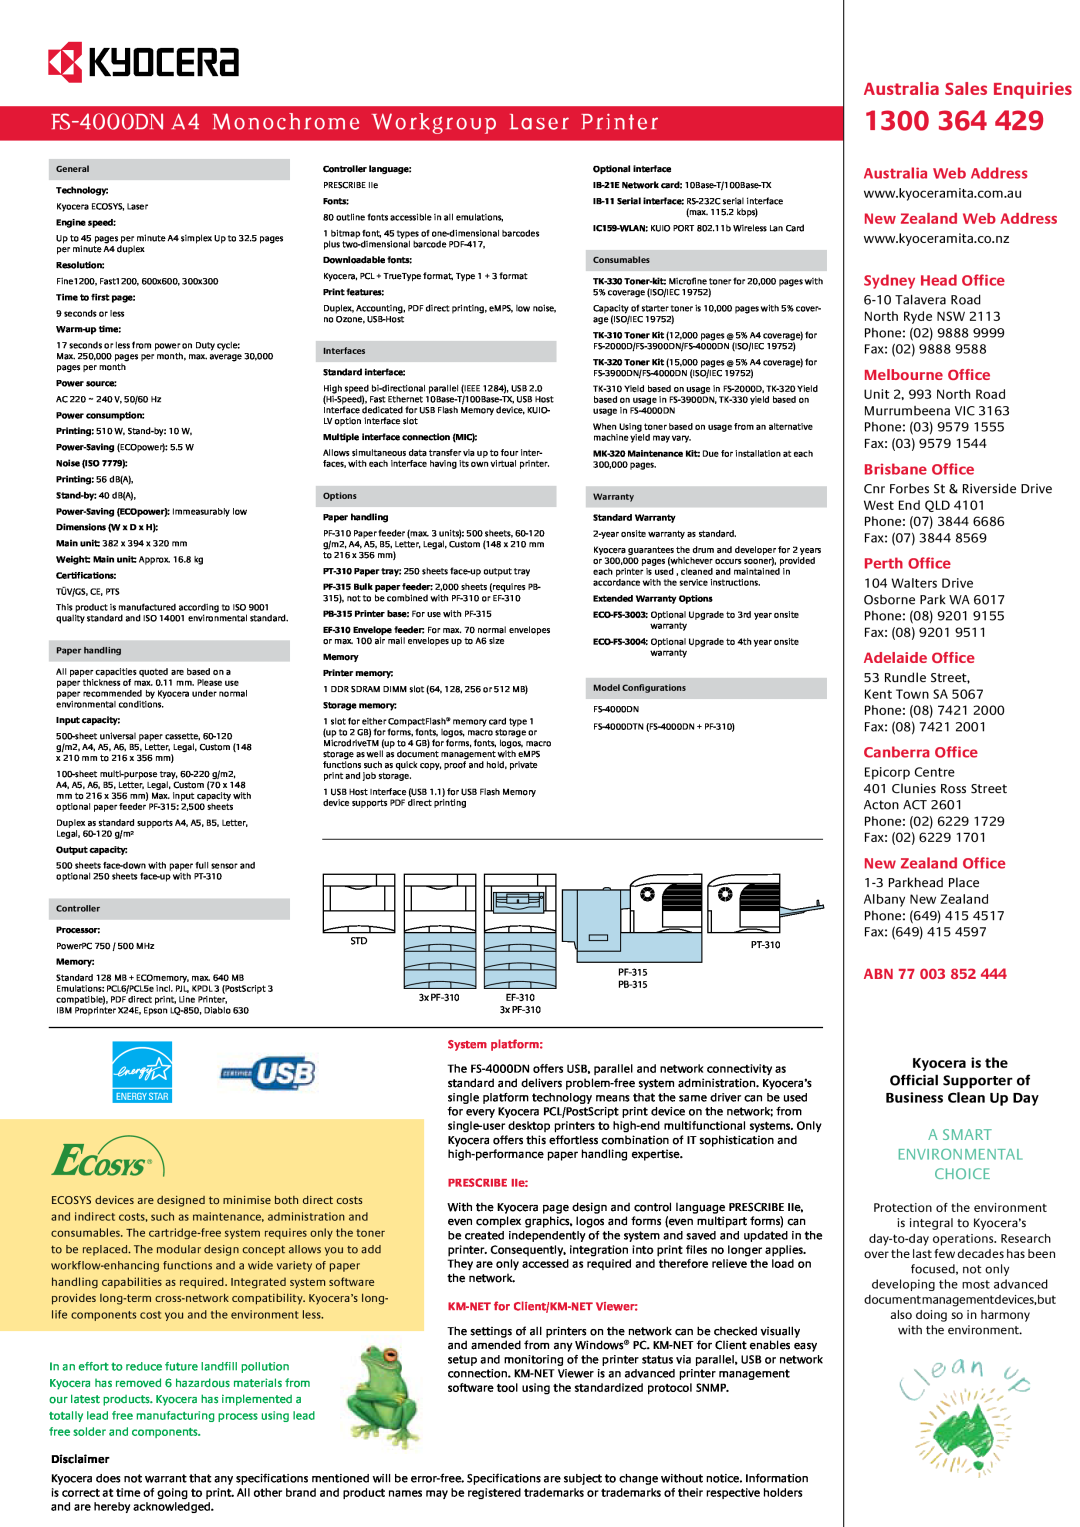 Epson manual 1300, FS-4000DN A4 Monochrome Workgroup Laser Printer, Australia Sales Enquiries, A Smart, Kyocera is the 